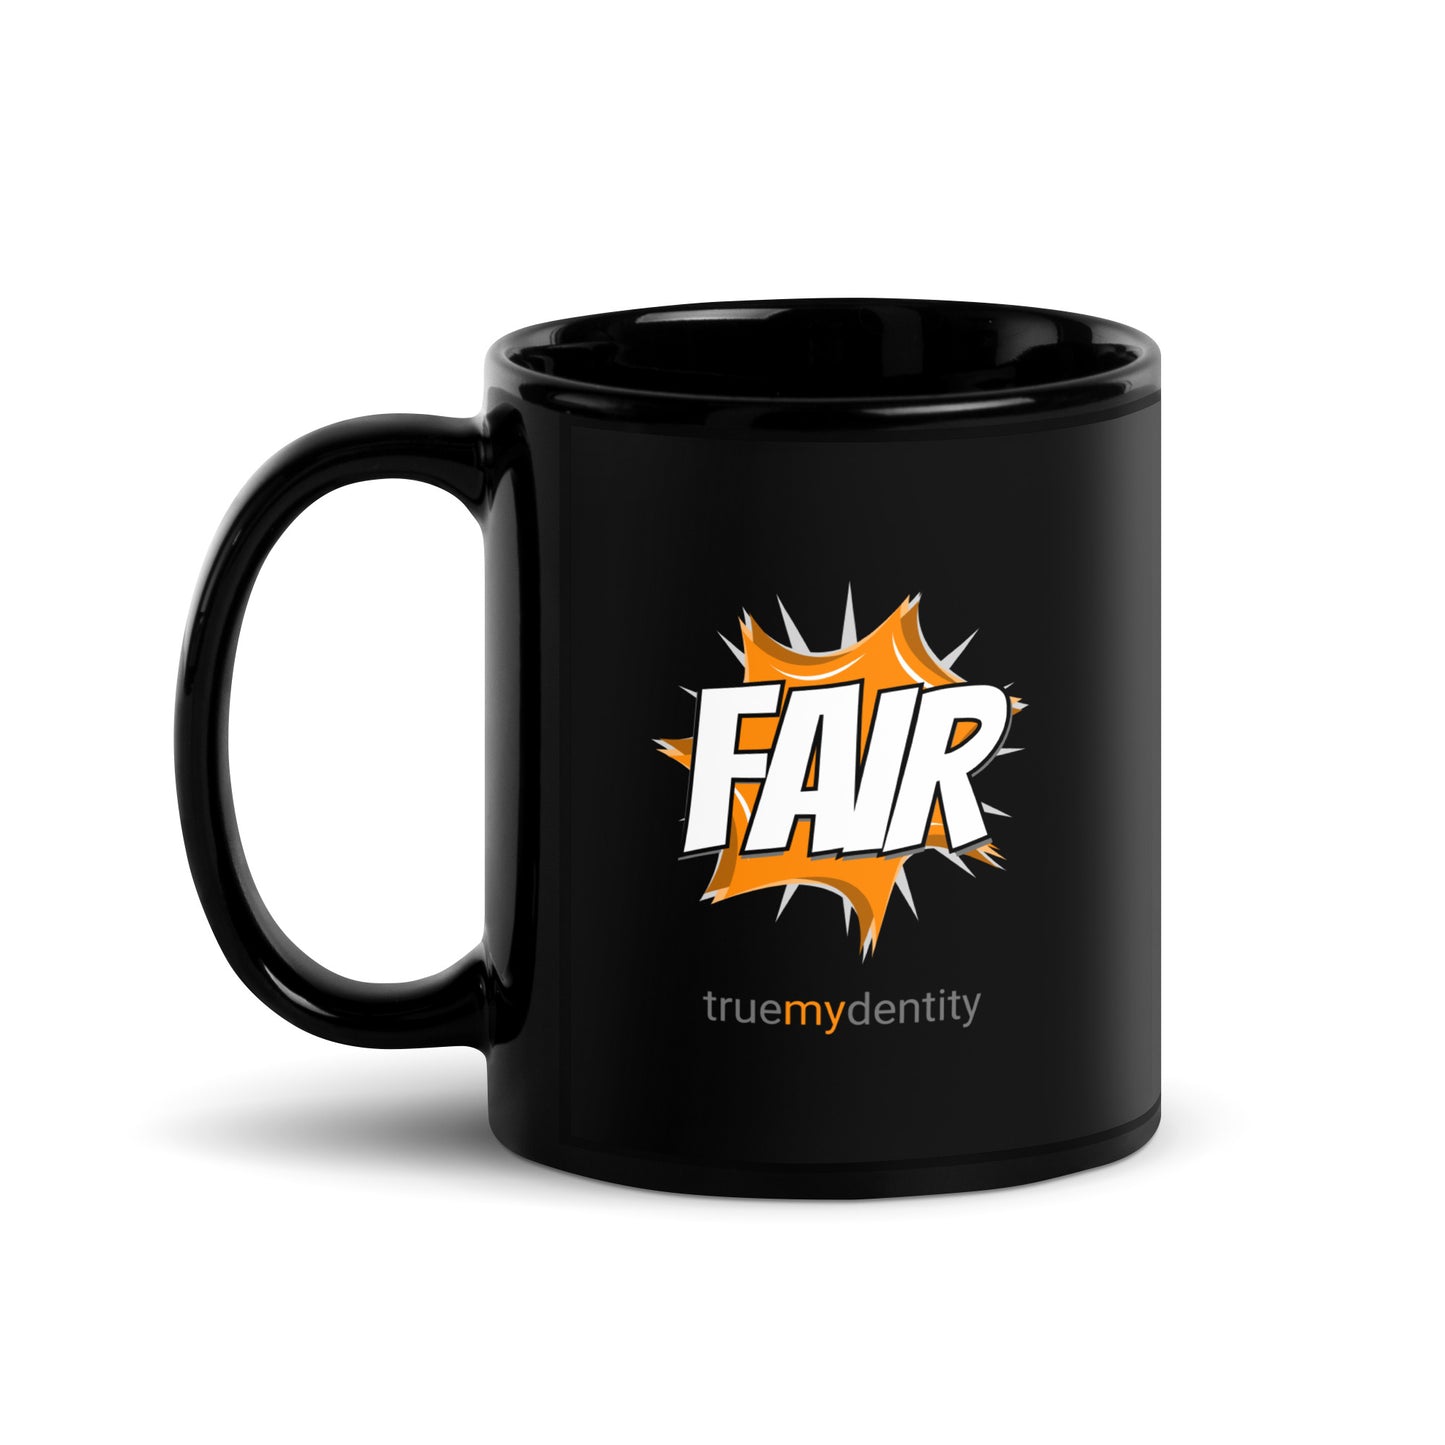 FAIR Black Coffee Mug Action 11 oz or 15 oz